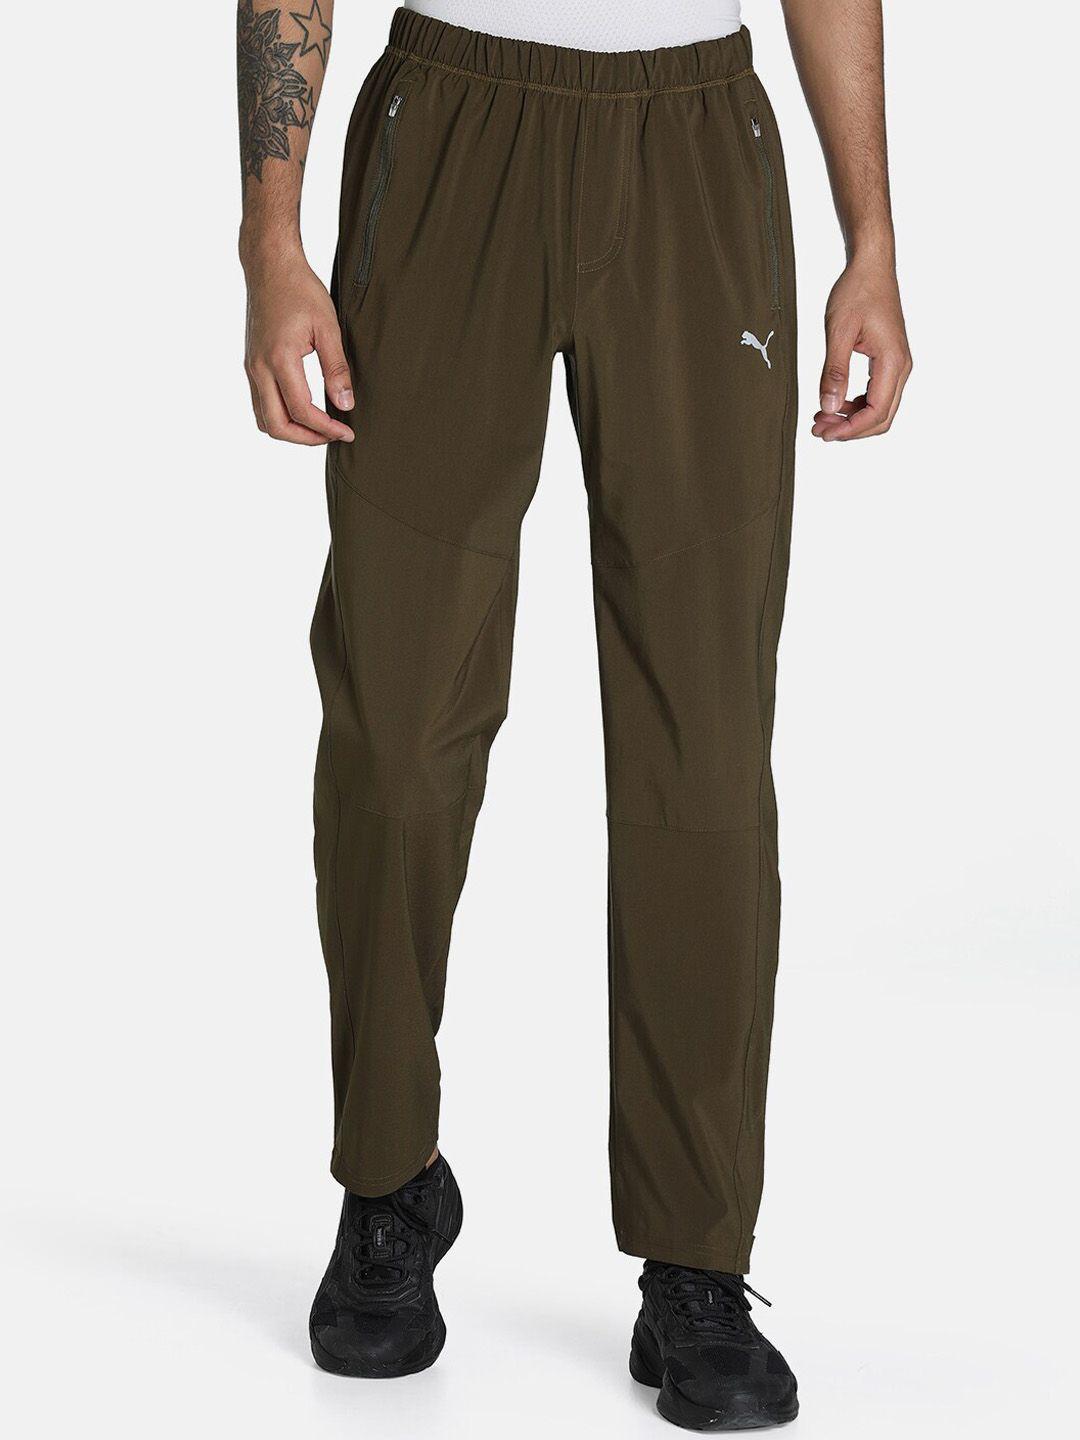 puma-men-olive-green-tapered-woven-regular-fit-track-pants